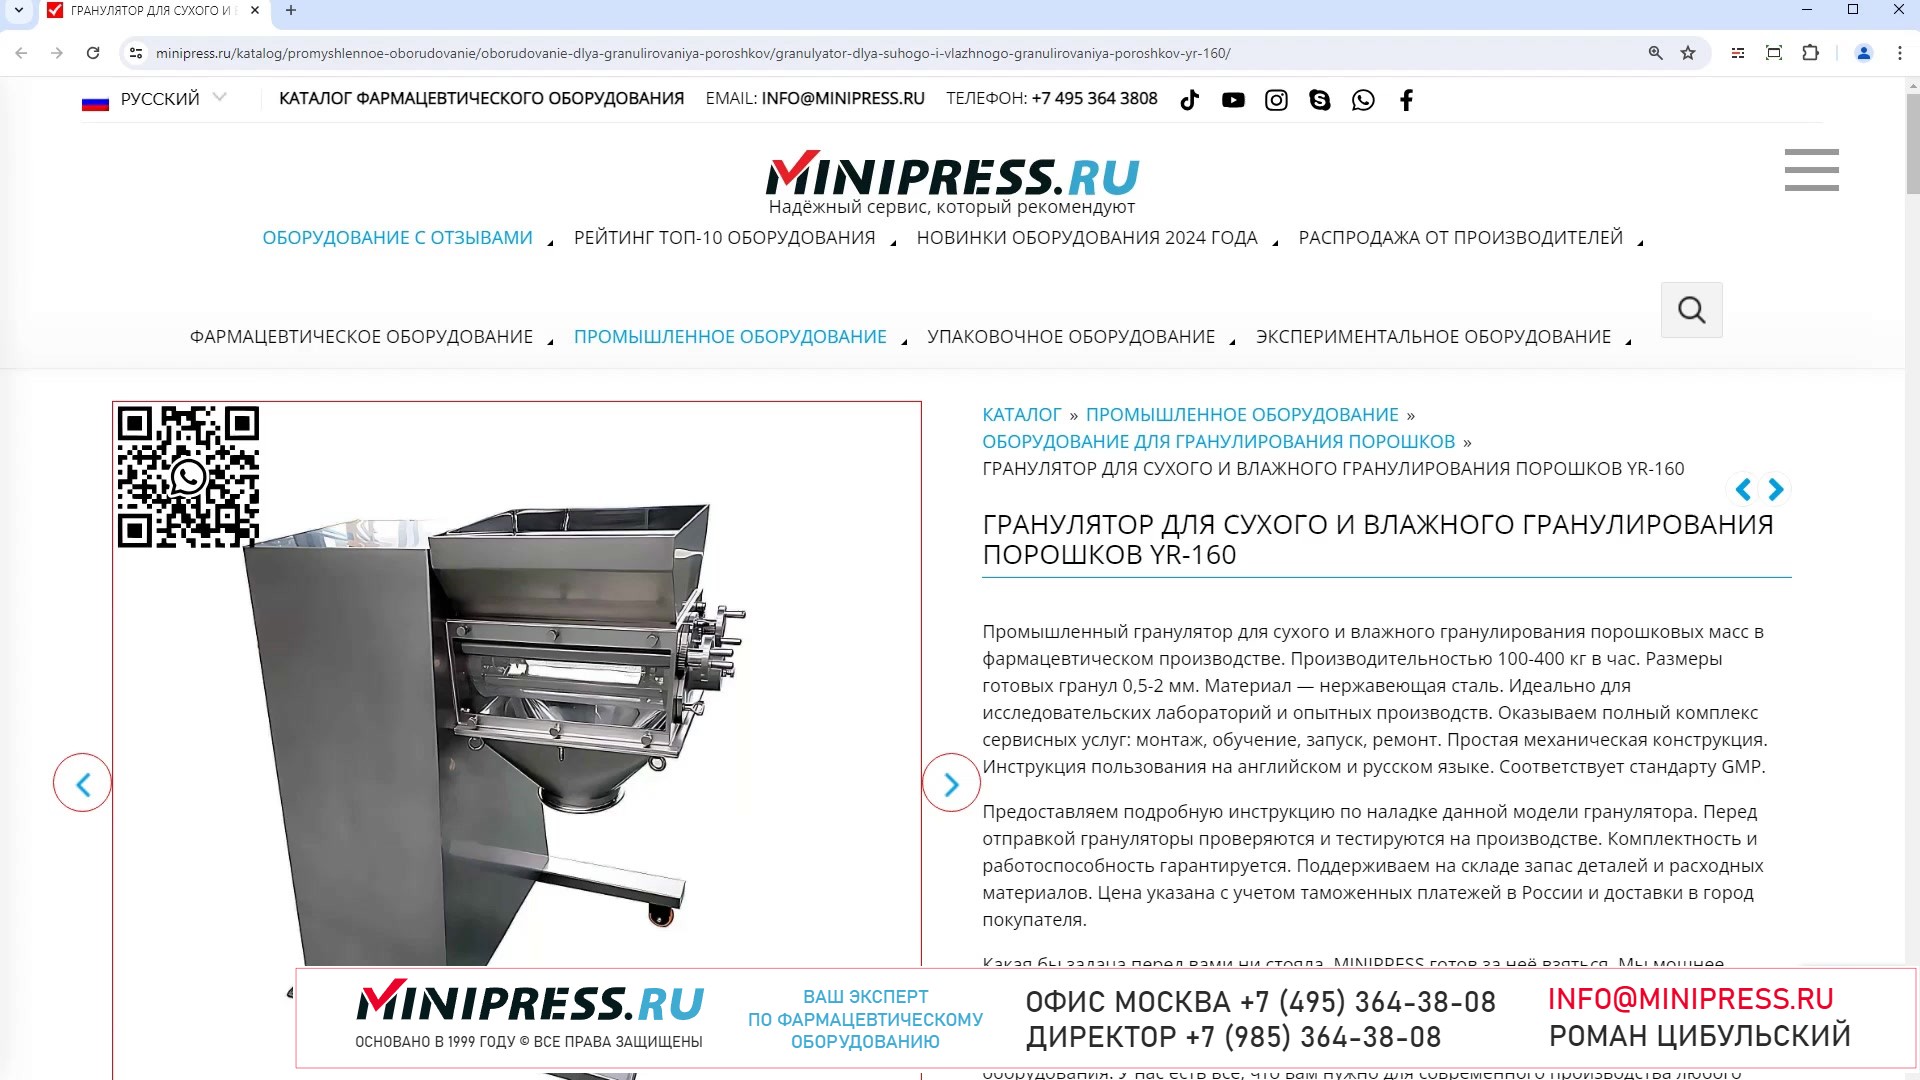 Minipress.ru Гранулятор для сухого и влажного гранулирования порошков YR-160